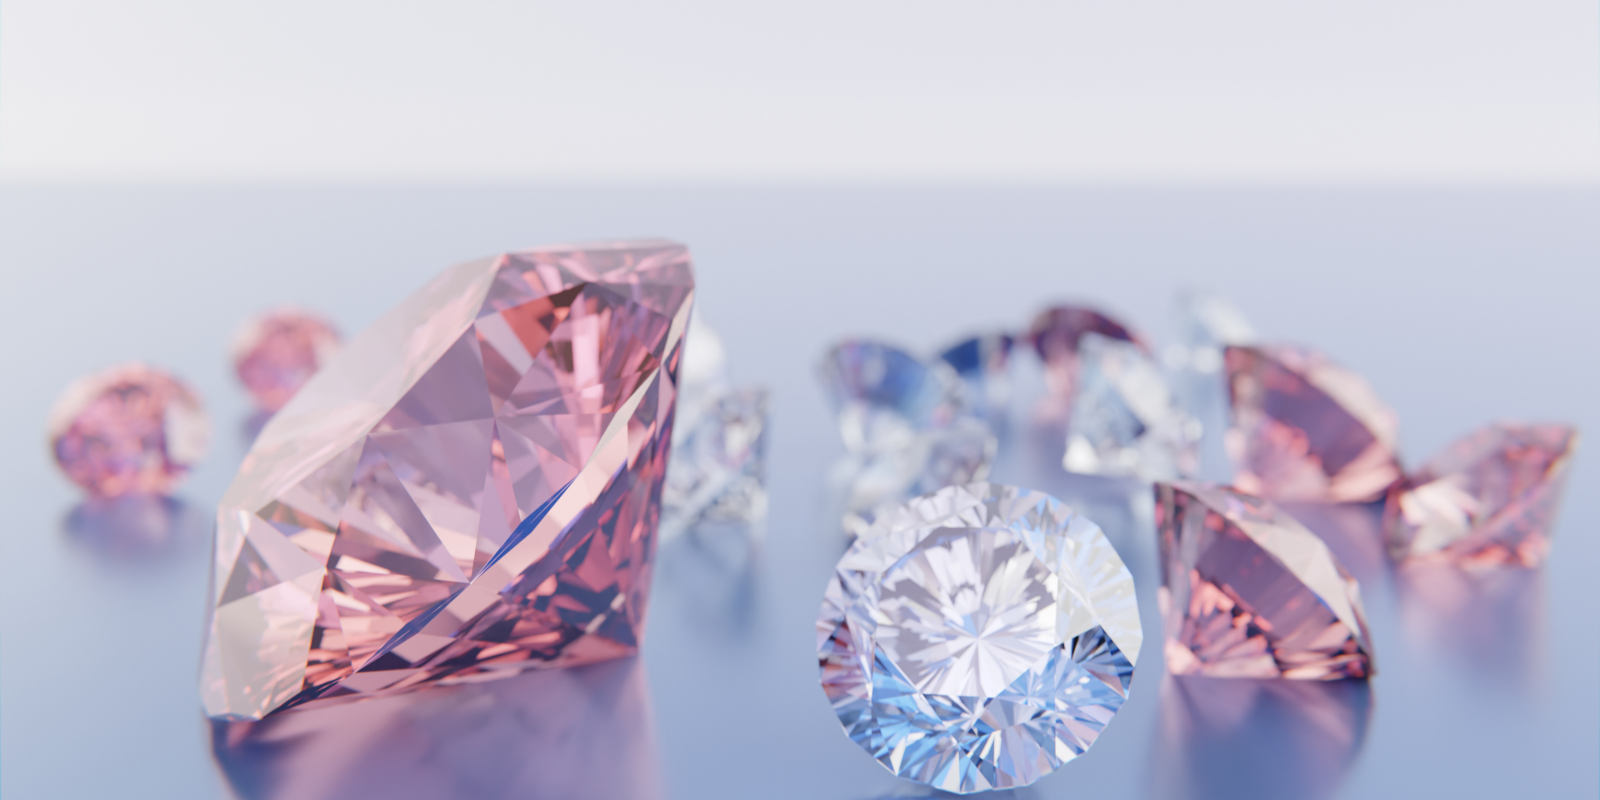 Lab Grown Diamonds Are the Future